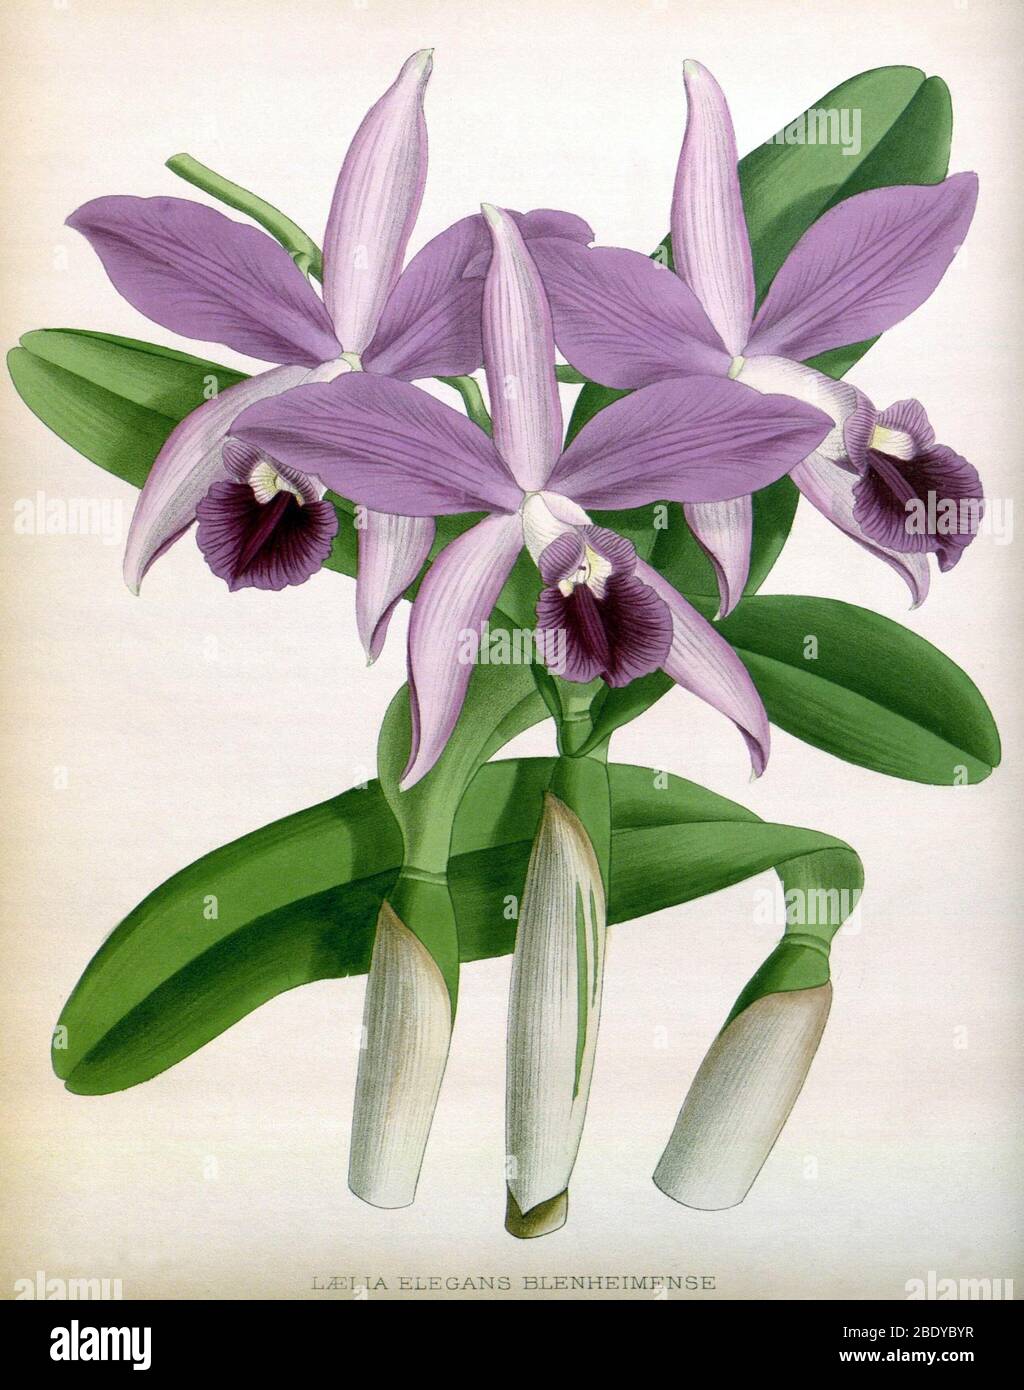 Orchid, Laelia elegans blenheimense, 1891 Stock Photo